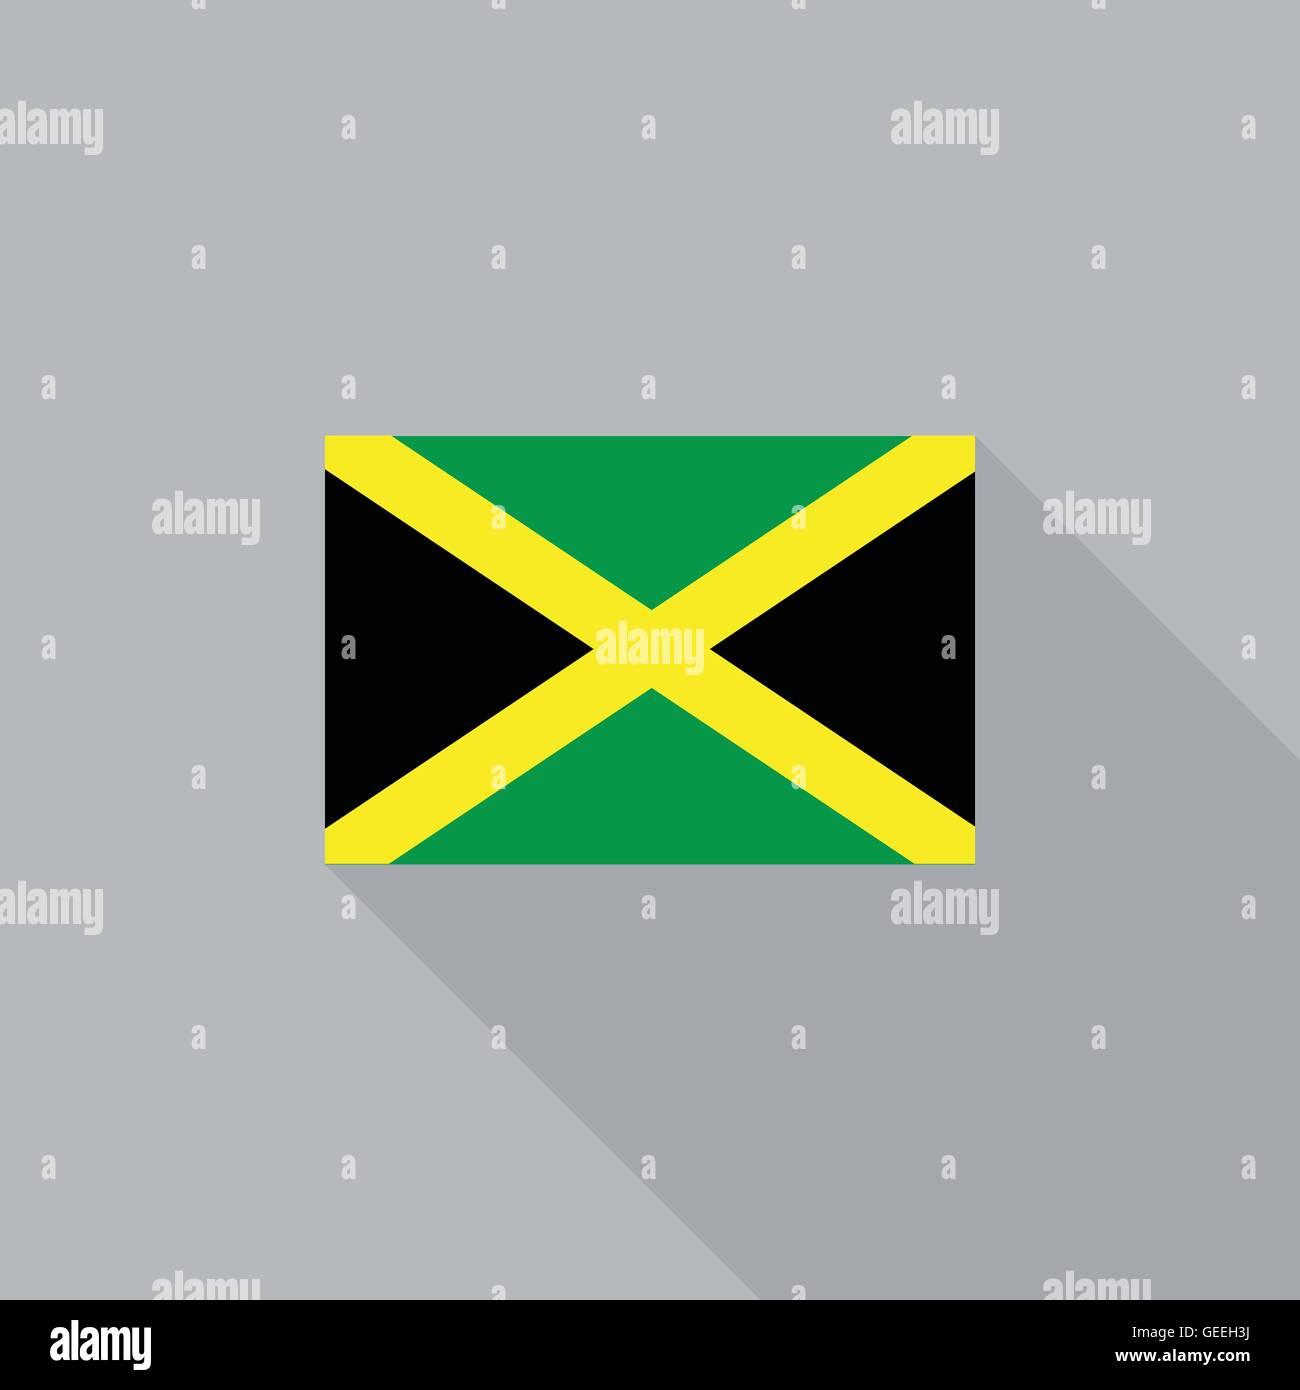 Jamaica flag flat design vector illustration Stock Vector